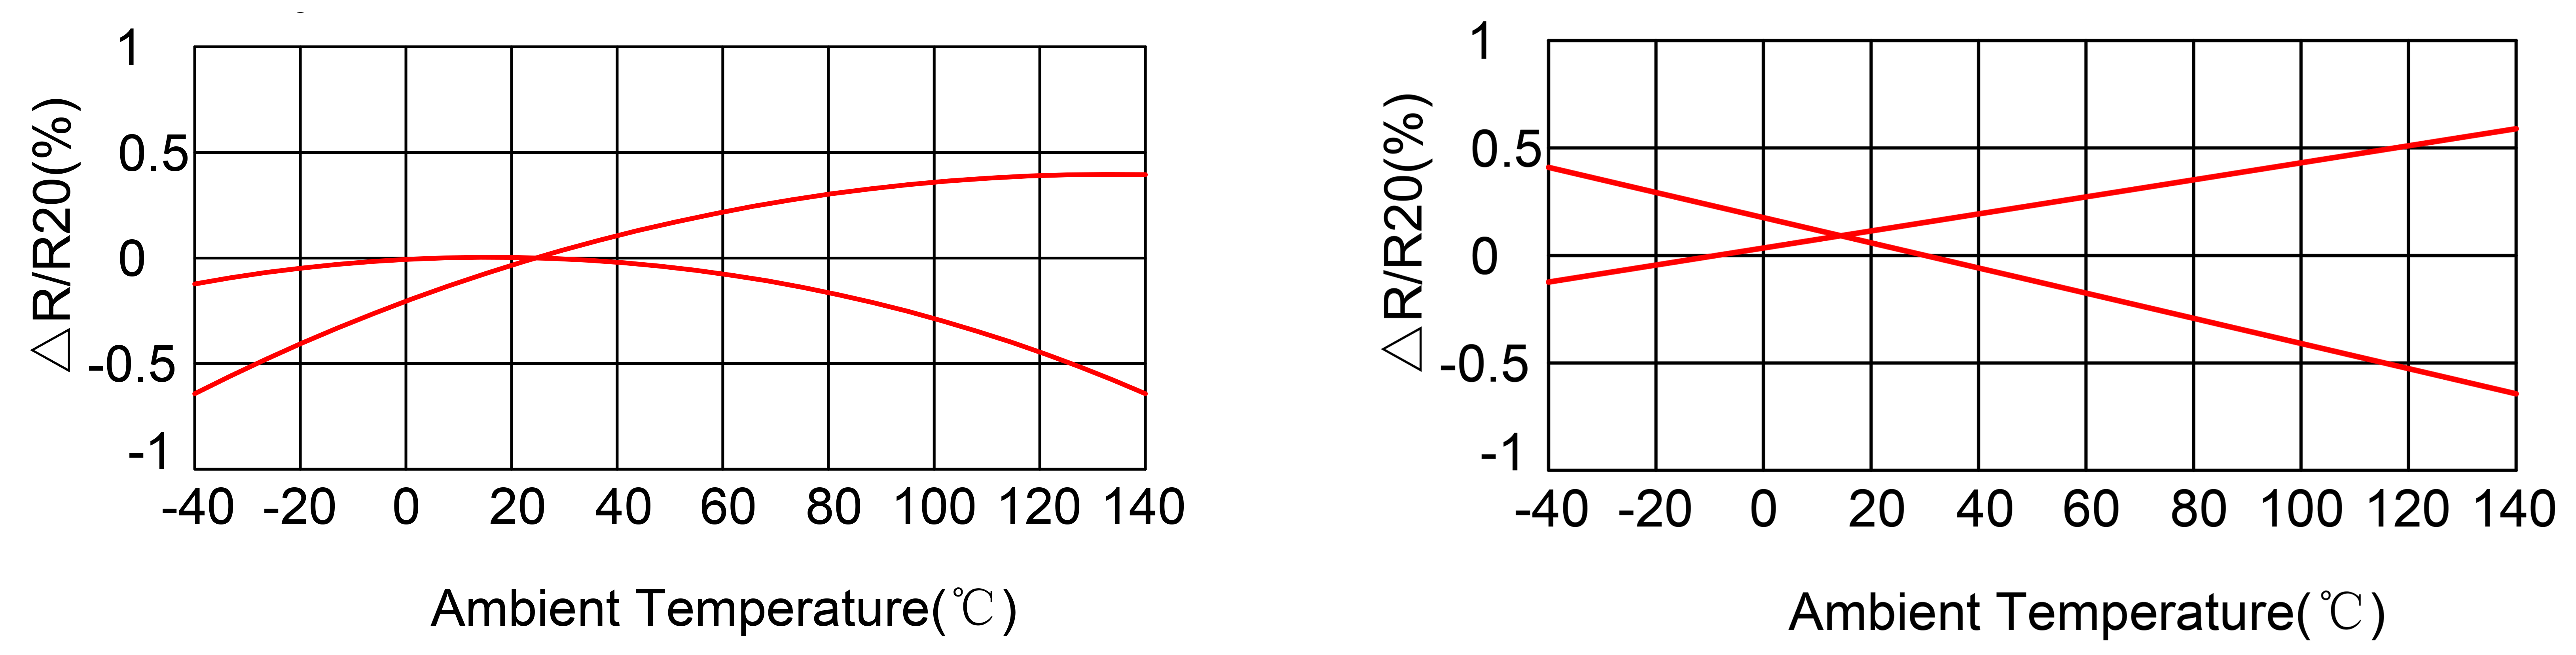 QESF SERIES(图3)